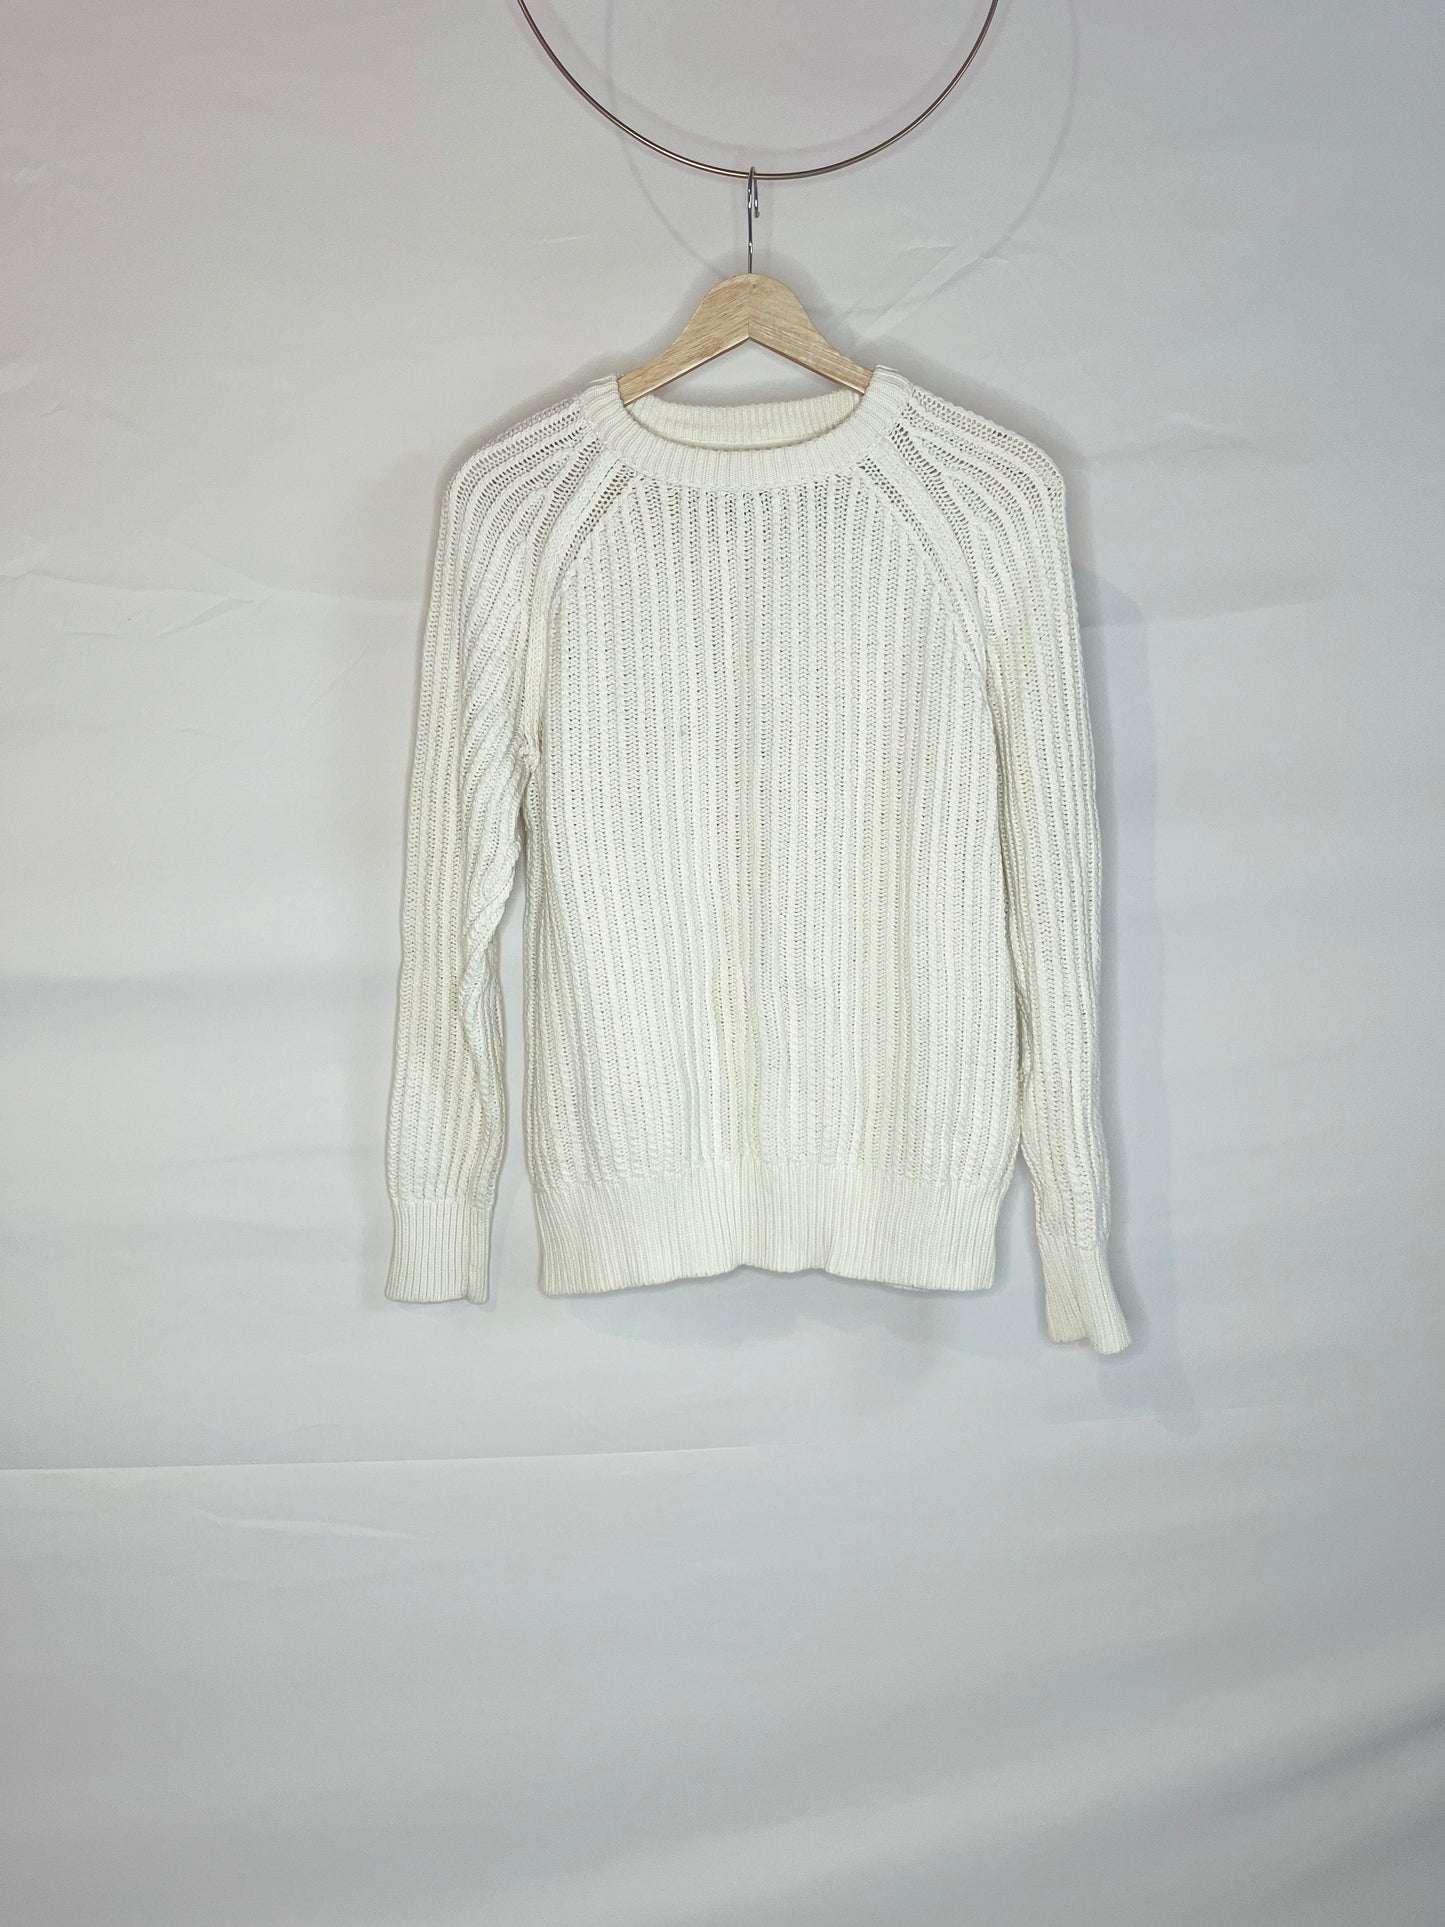 White Crochet Sweater